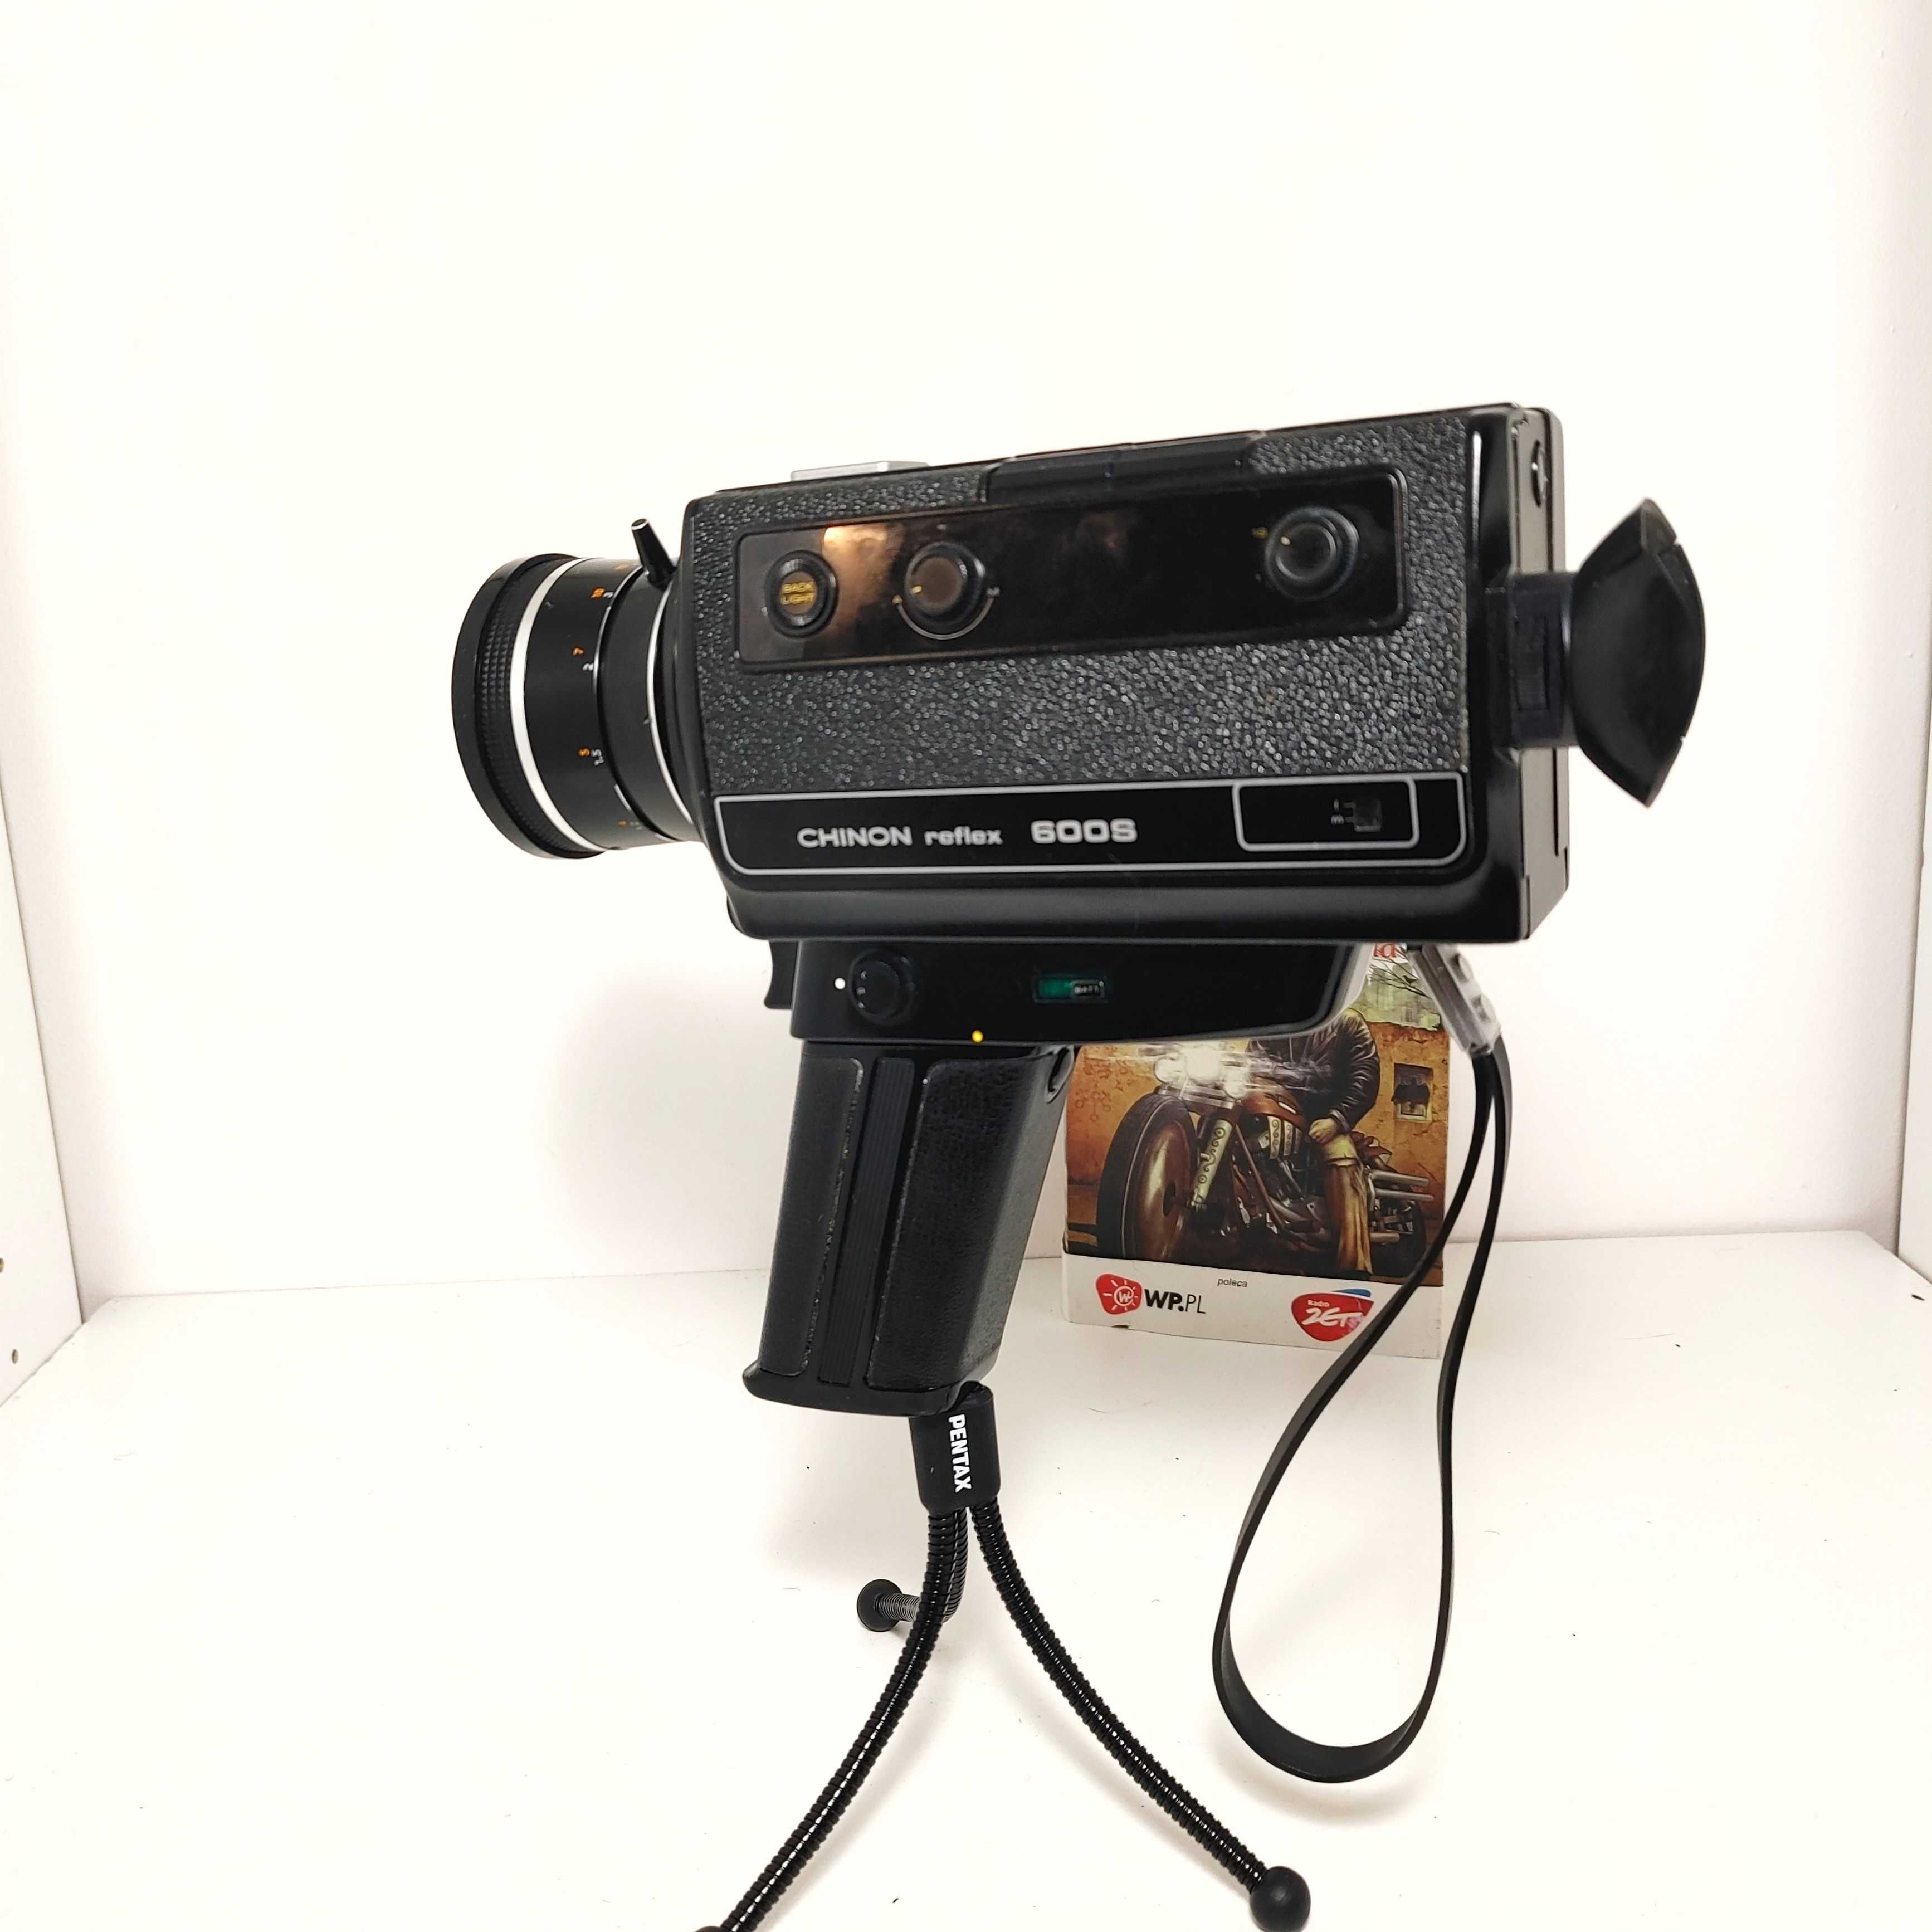 Kamera filmowa SUPER 8 mm CHINON reflex 600s z 1974 roku Futerał